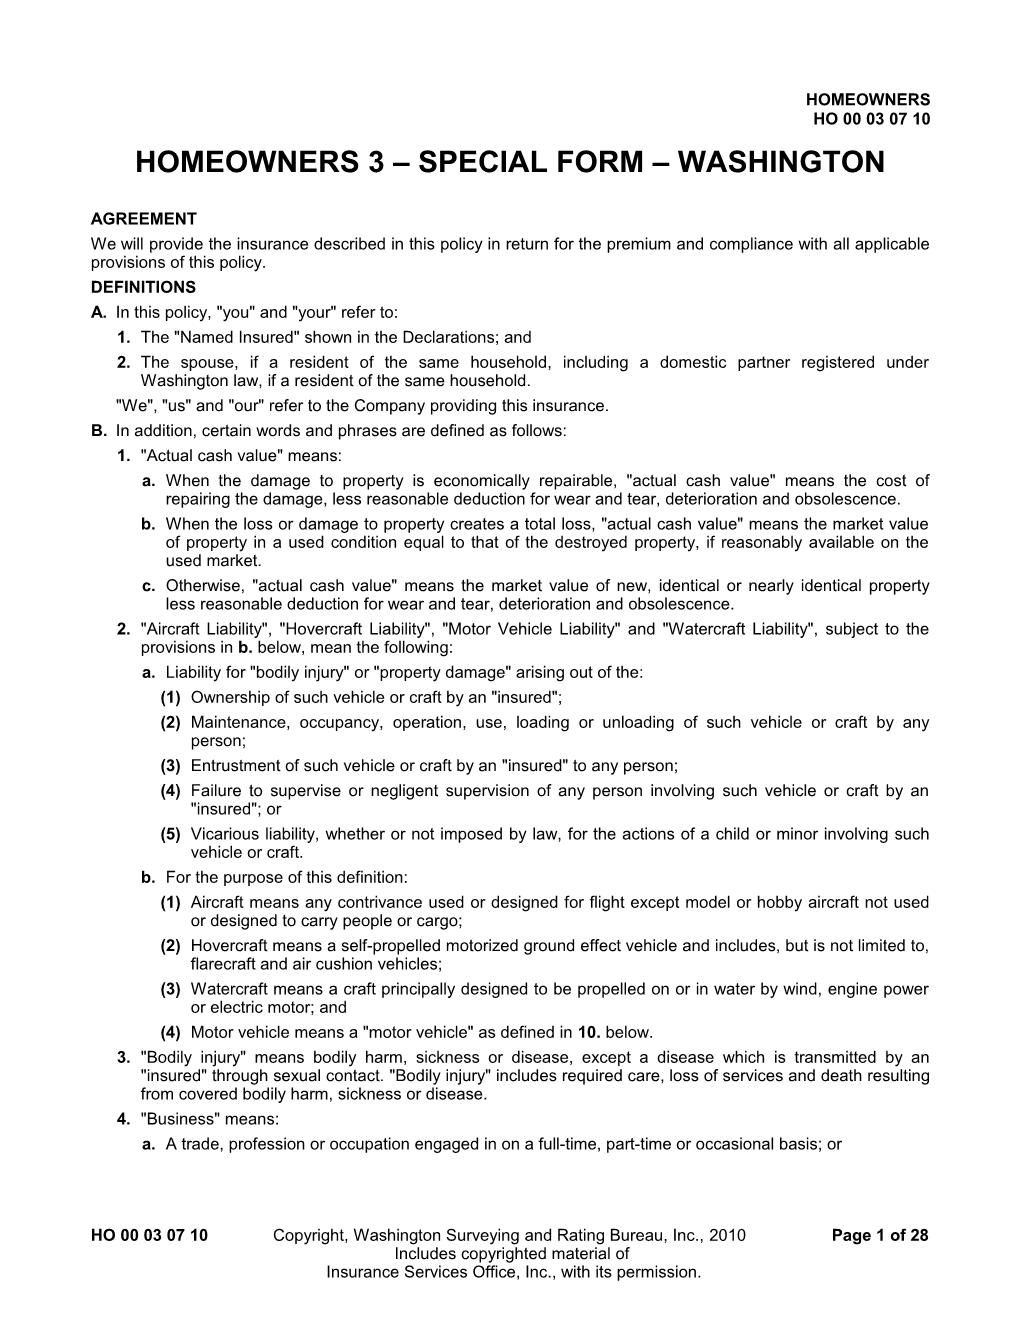 Homeowners 3 Special Form Washington